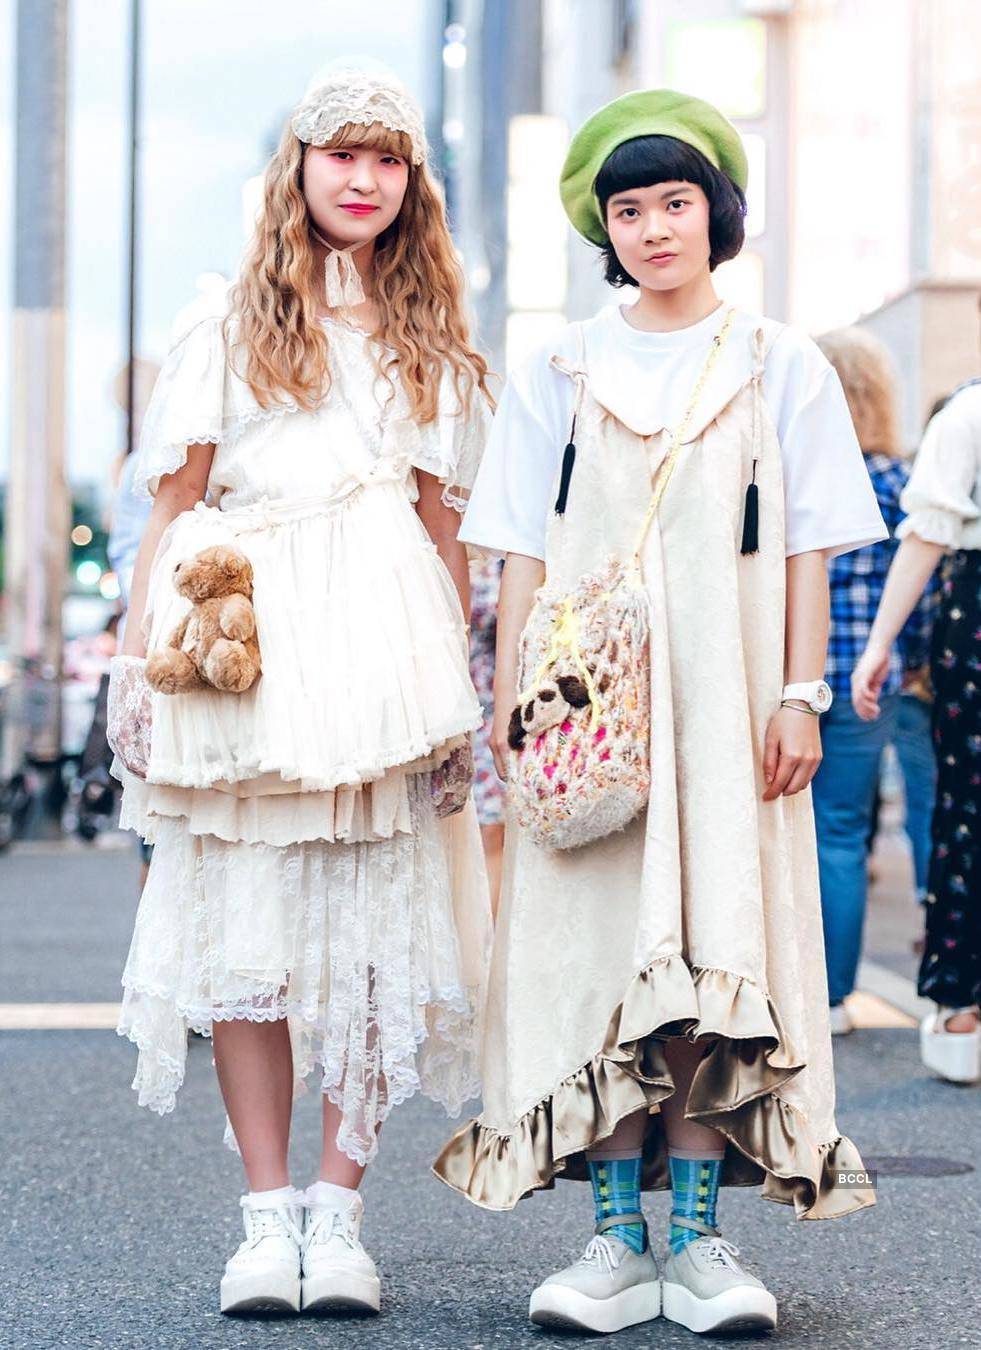 Nothing beats Tokyo Street Fashion